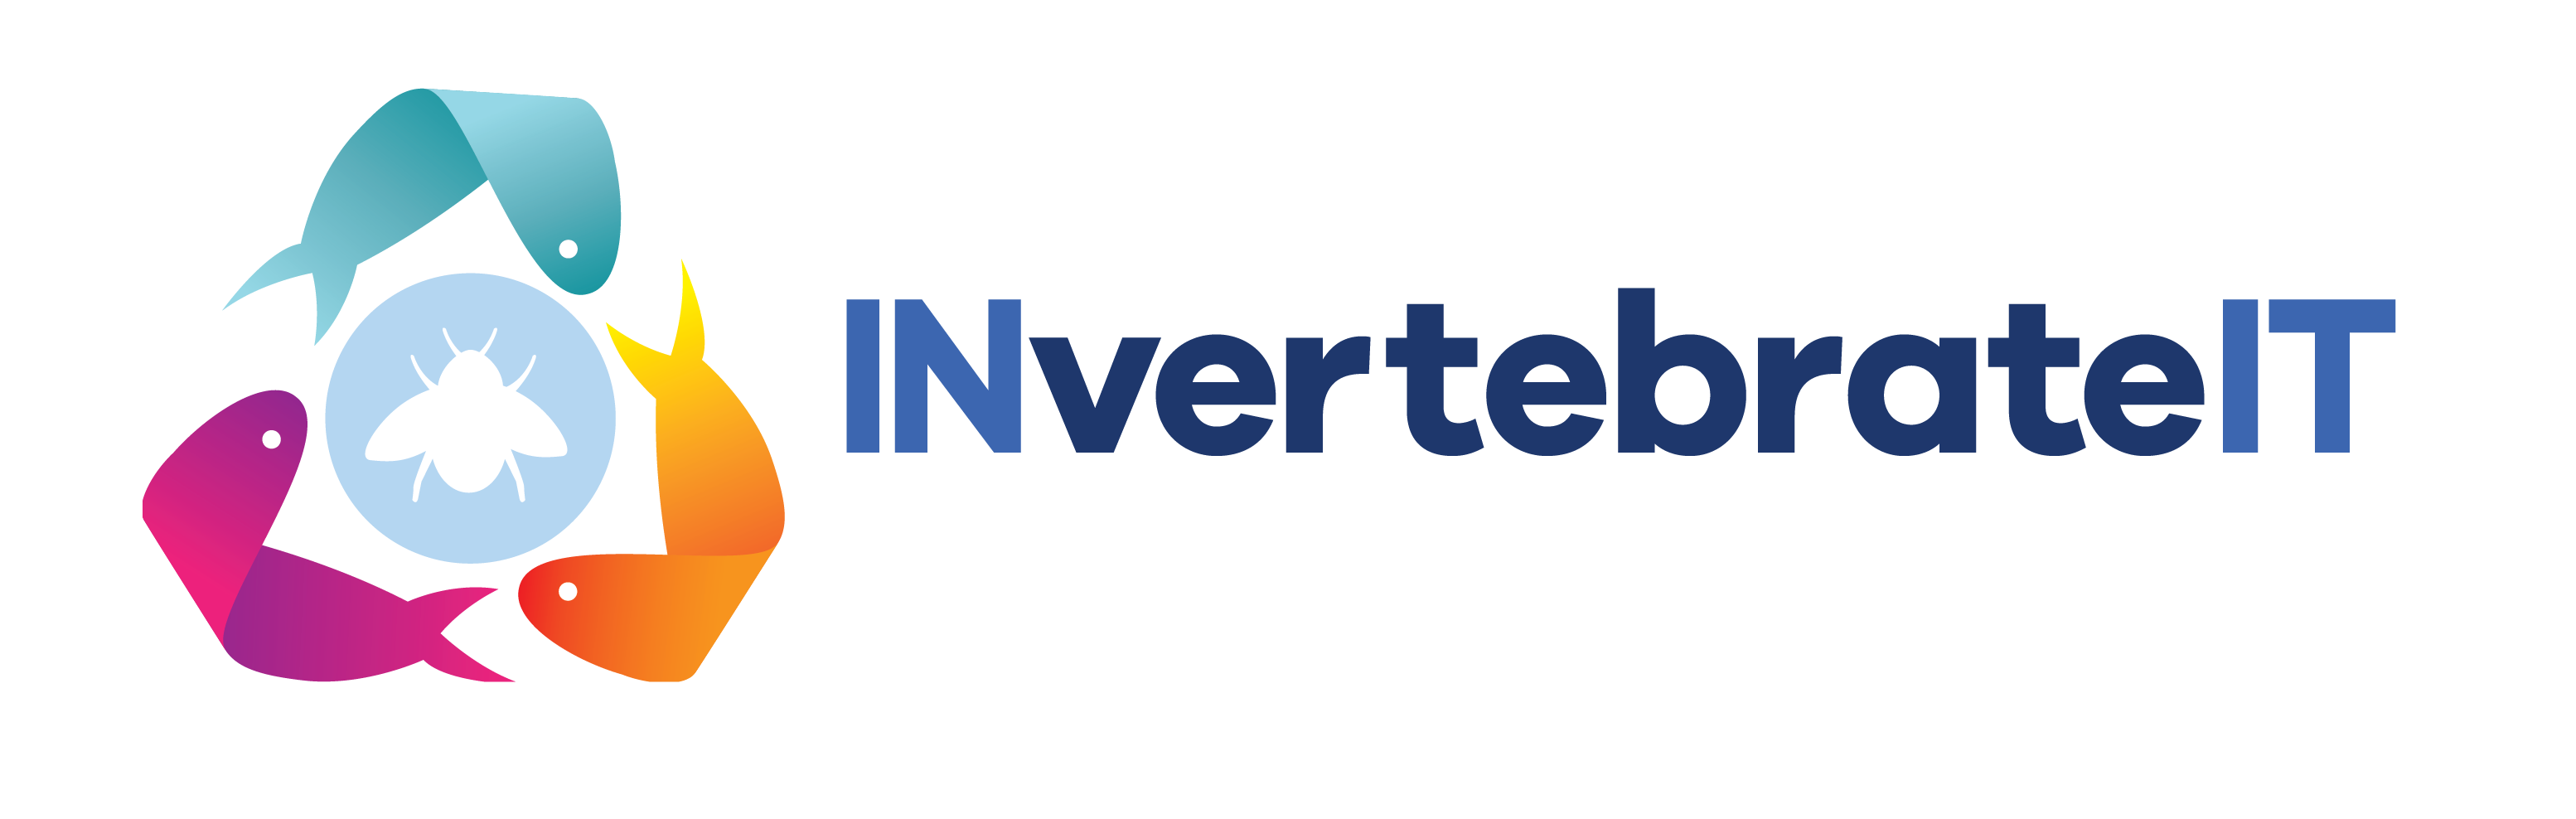 INvertebrateIT logo